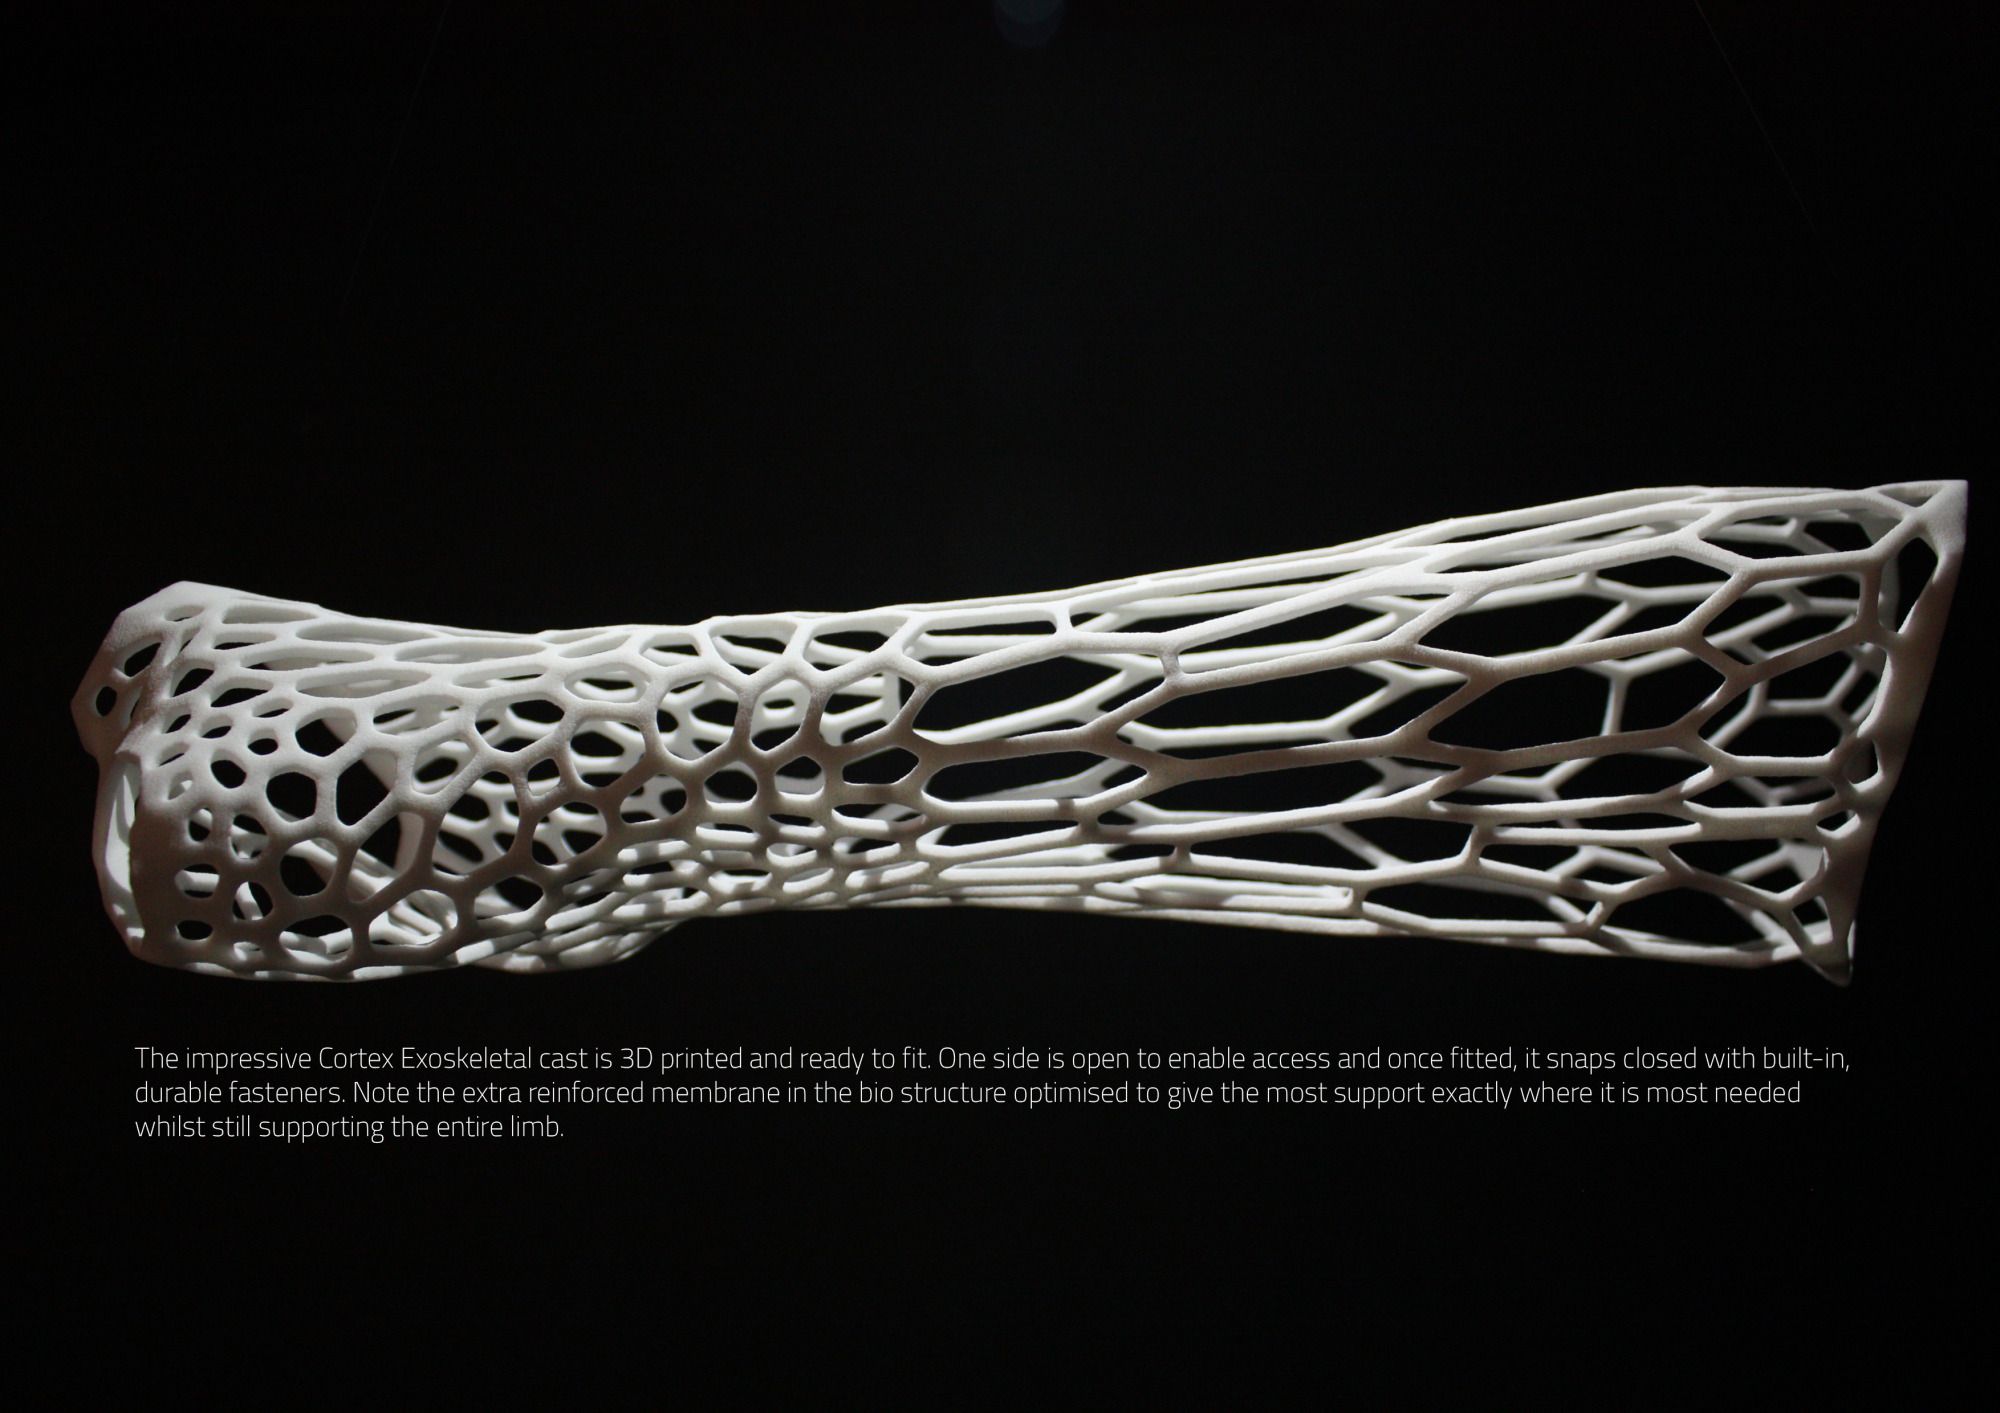 Cortex Exoskeletal Cast